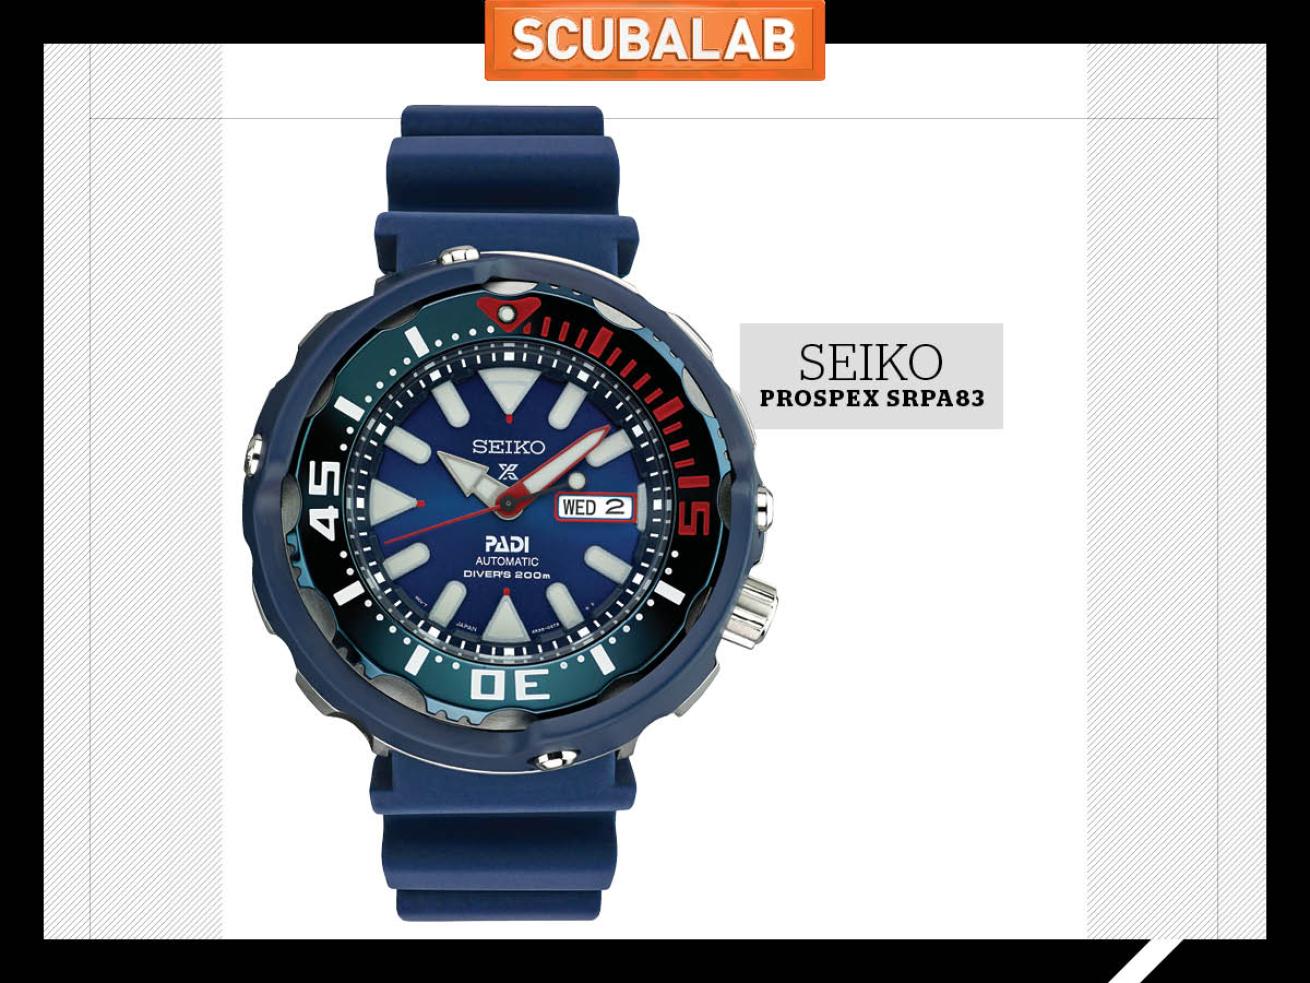 Seiko Prospex SRPA83 dive watch